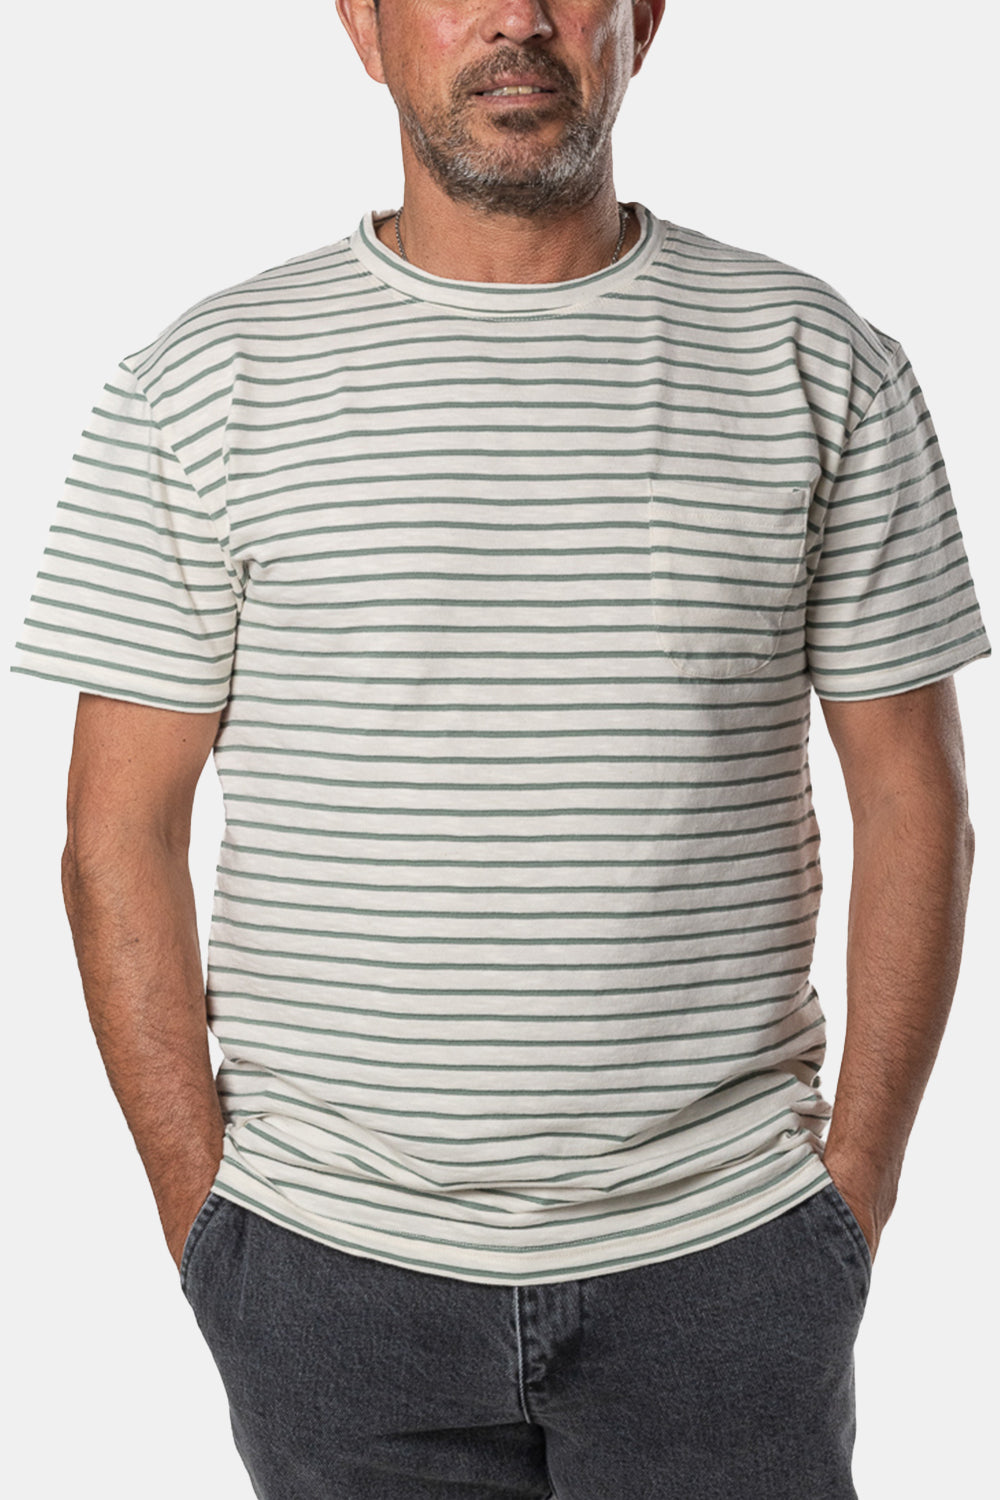 La Paz Guerreiro T-Shirt (Green Bay Stripes)